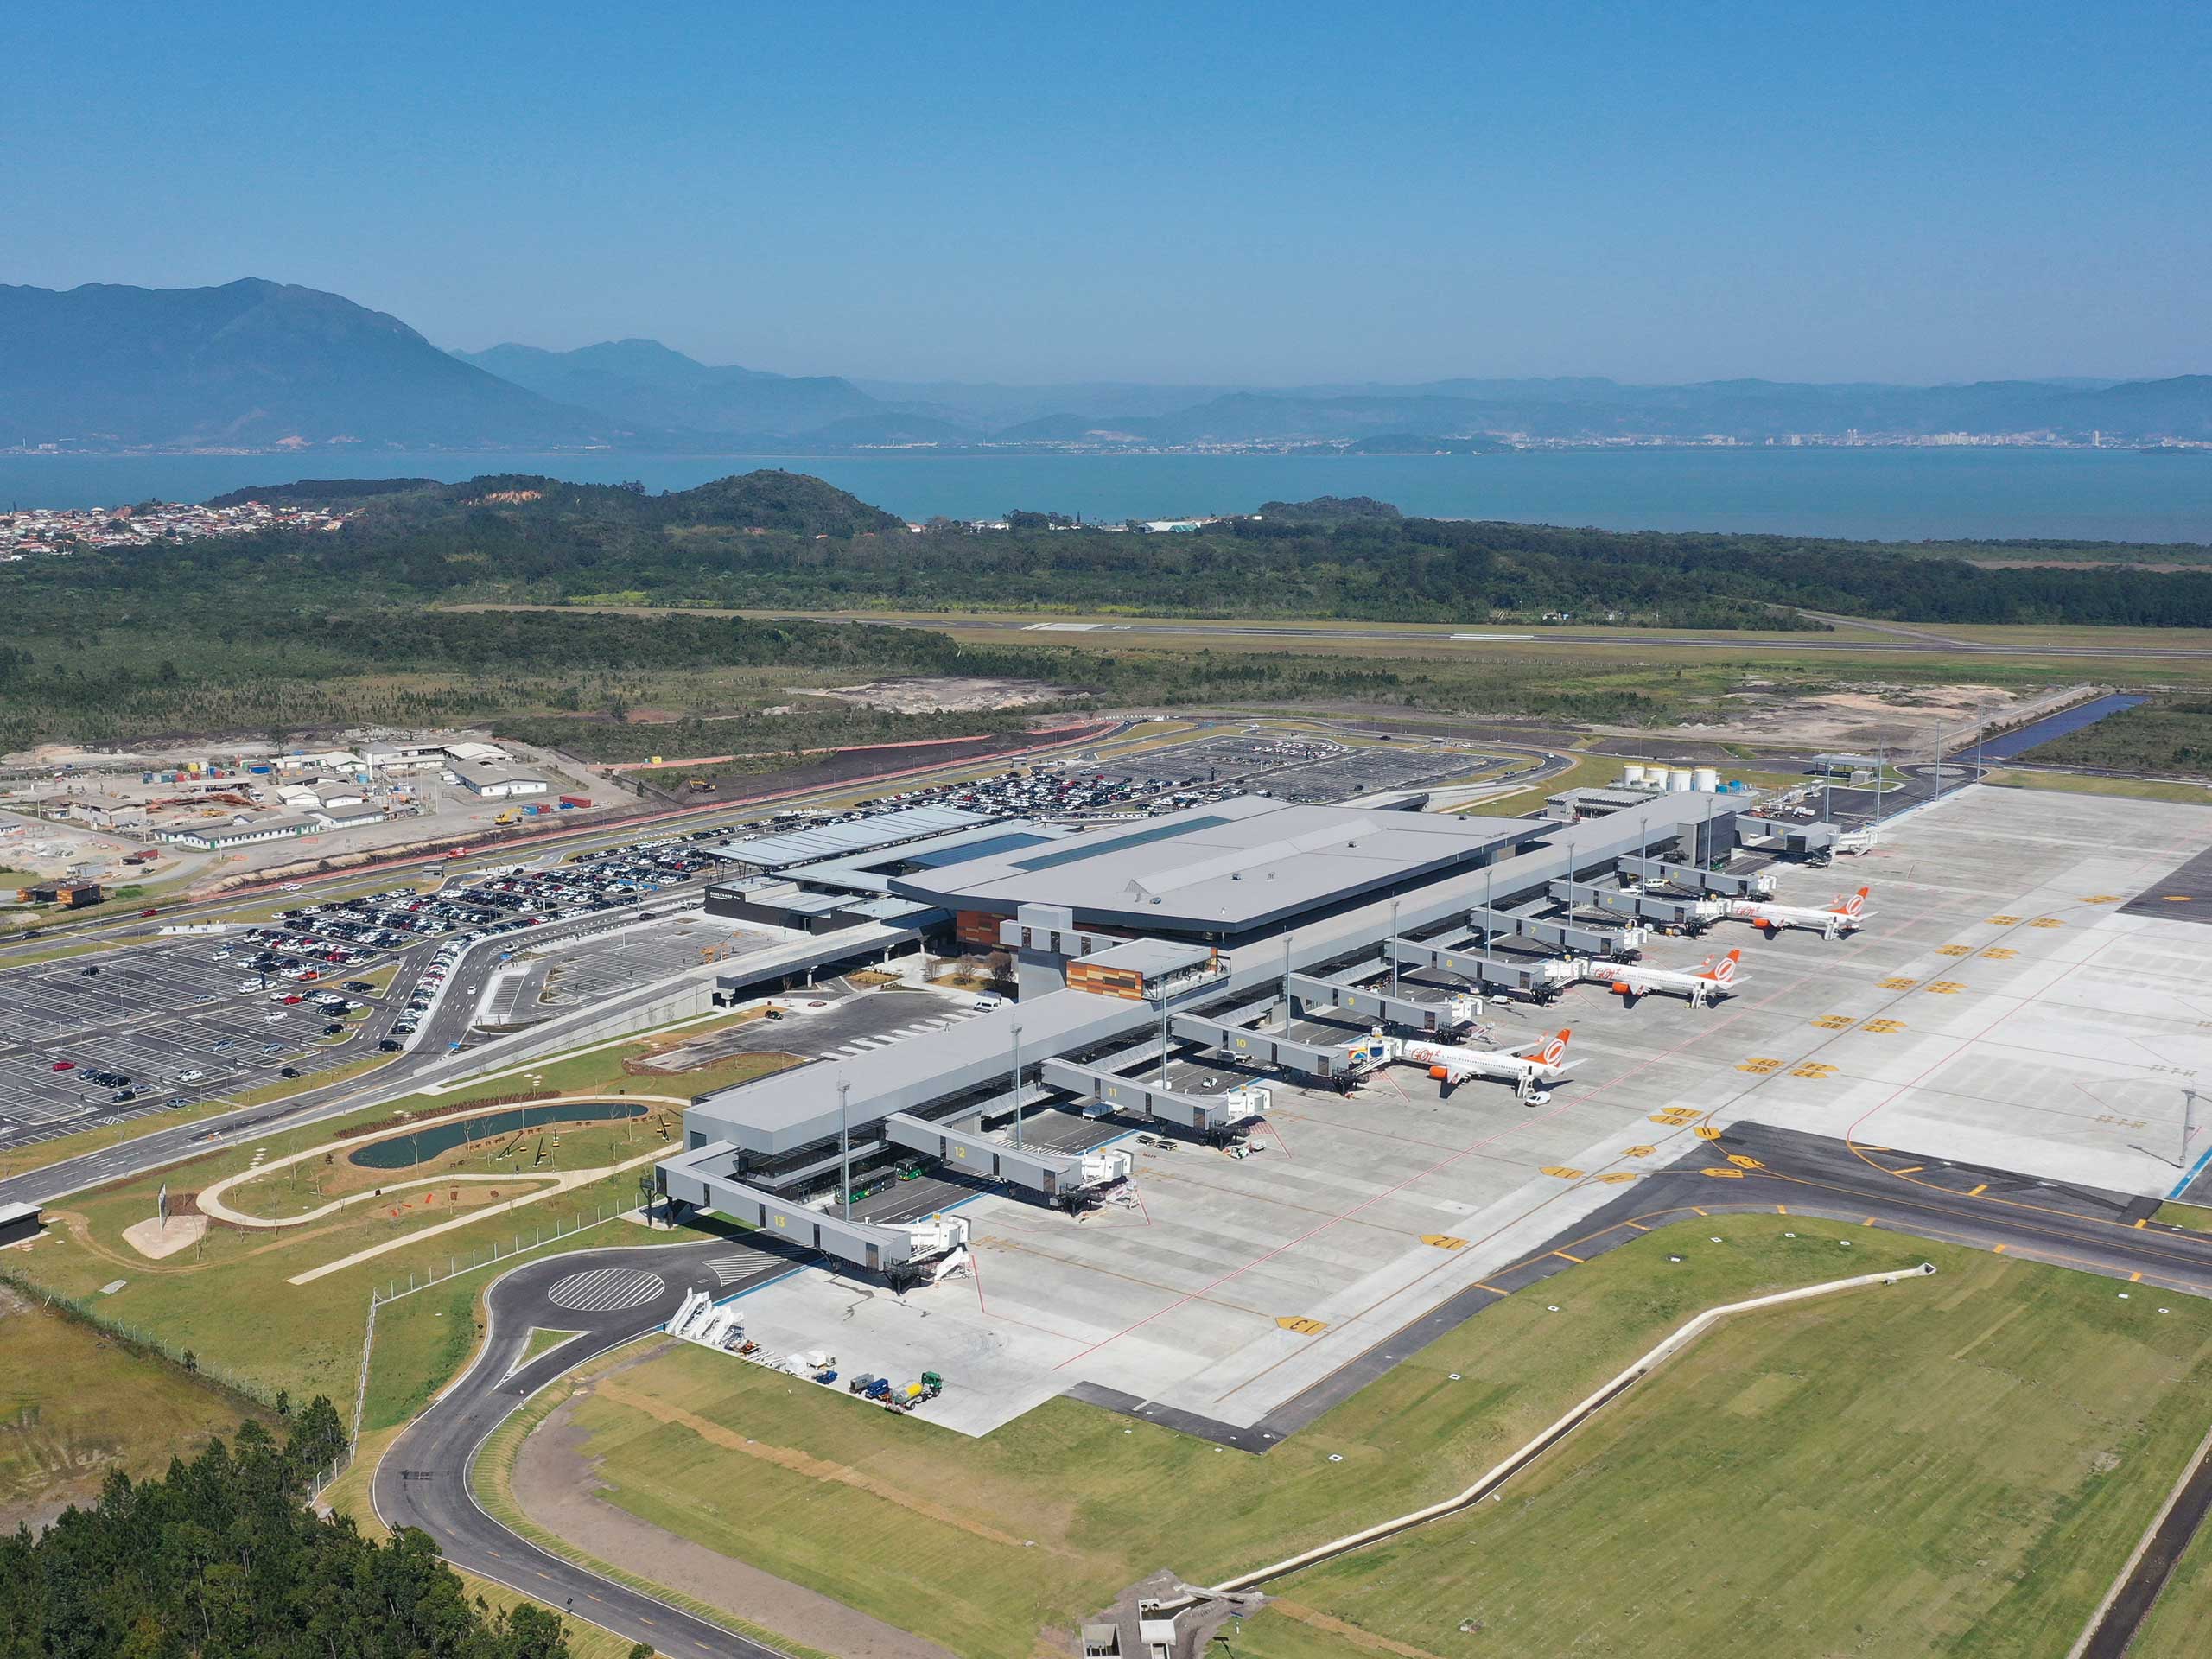 Flughafen Florianópolis in Brasilien, 2017